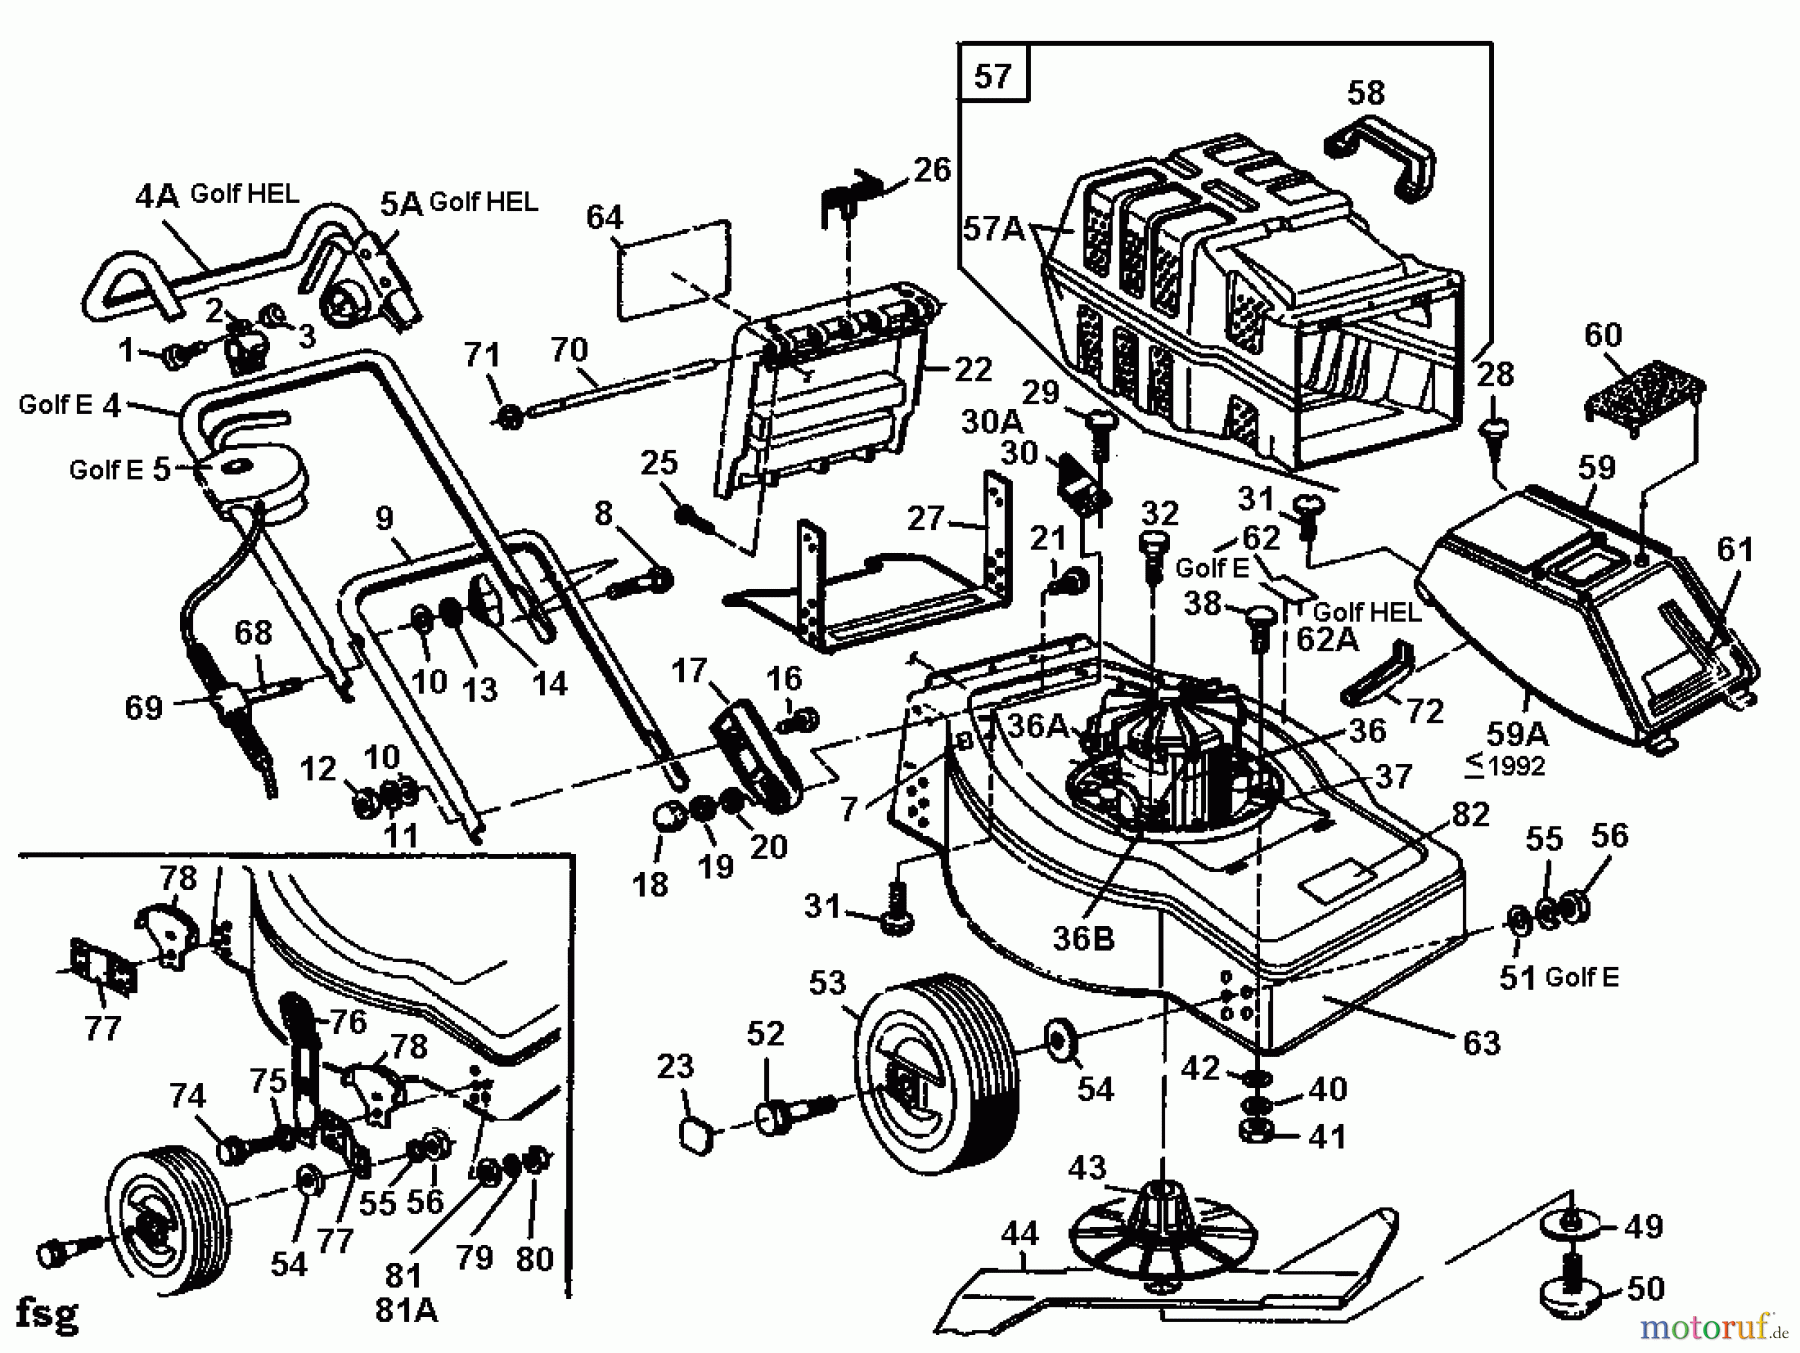  Golf Electric mower Golf E 02881.06  (1991) Basic machine